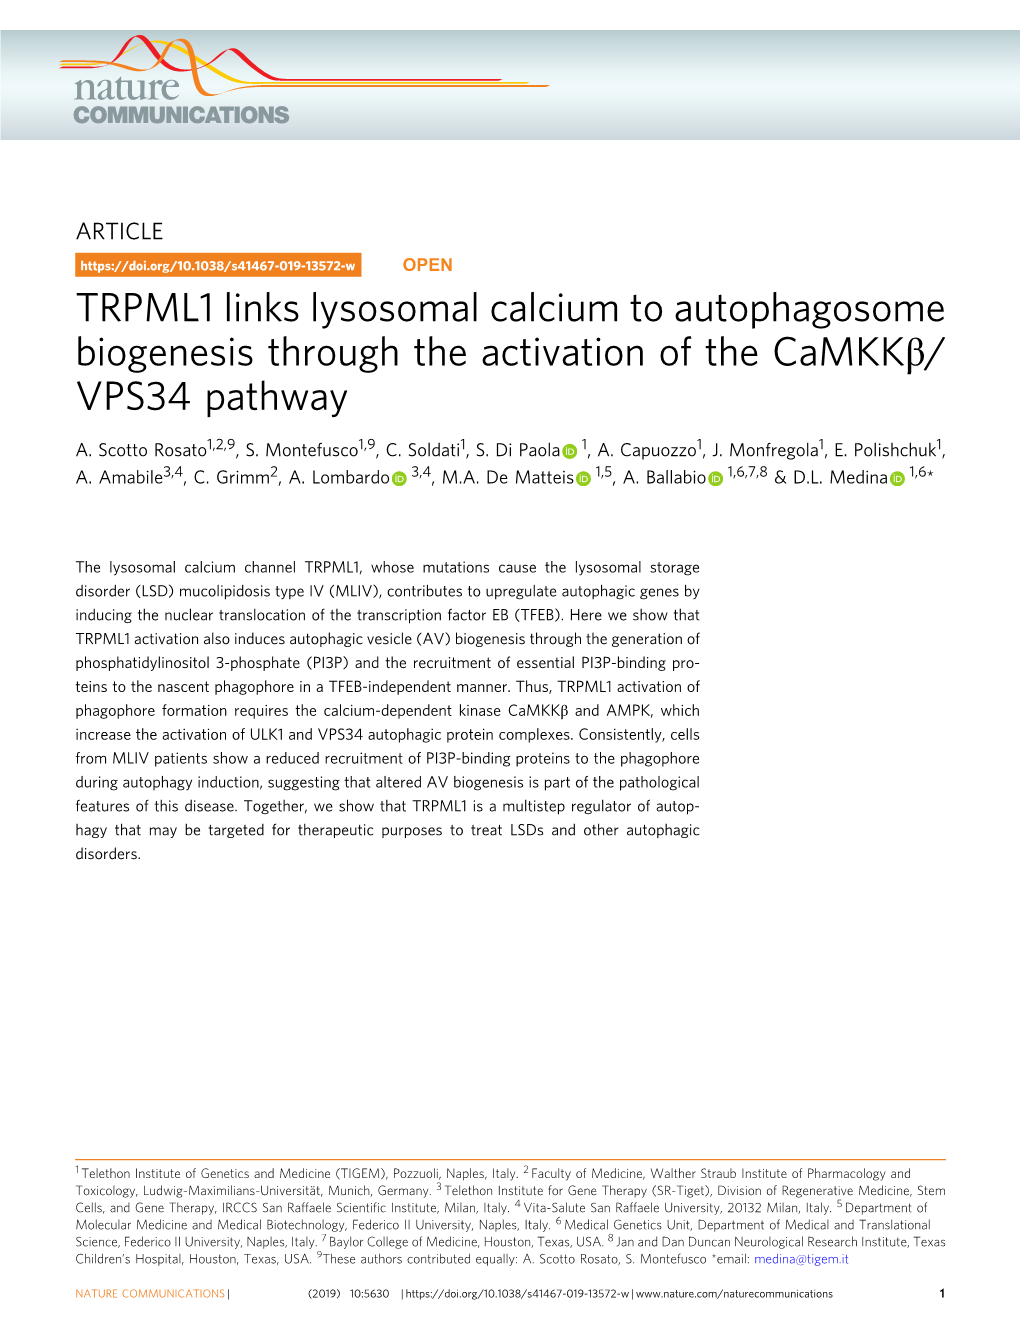 TRPML1 Links Lysosomal Calcium to Autophagosome Biogenesis Through the Activation of the Camkkβ/ VPS34 Pathway